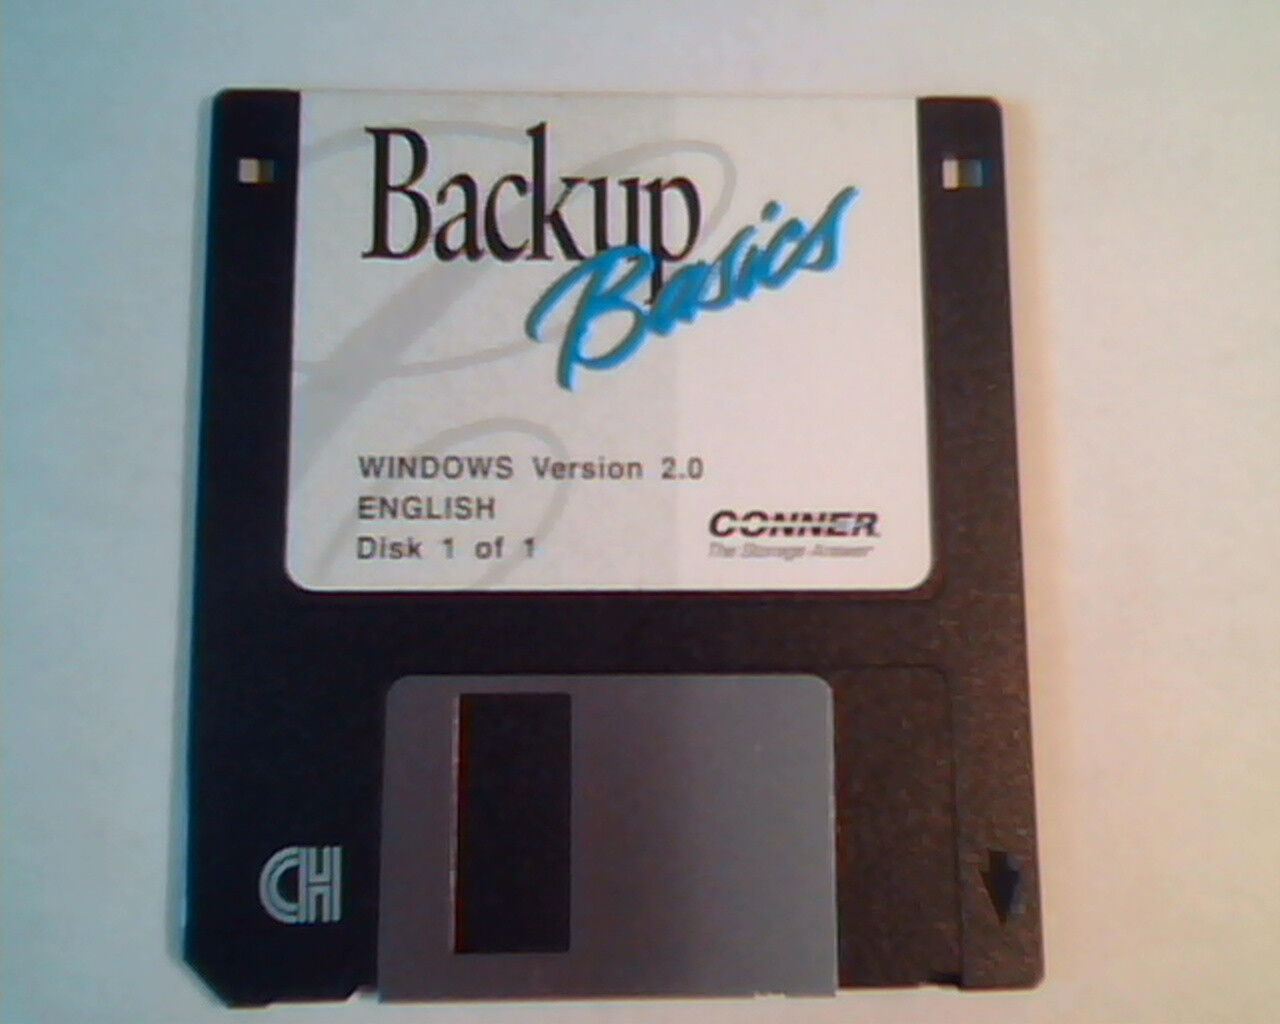 Floppy Disk Conner Backup Basics Version 2.0 english - vintage tape drives 3.1